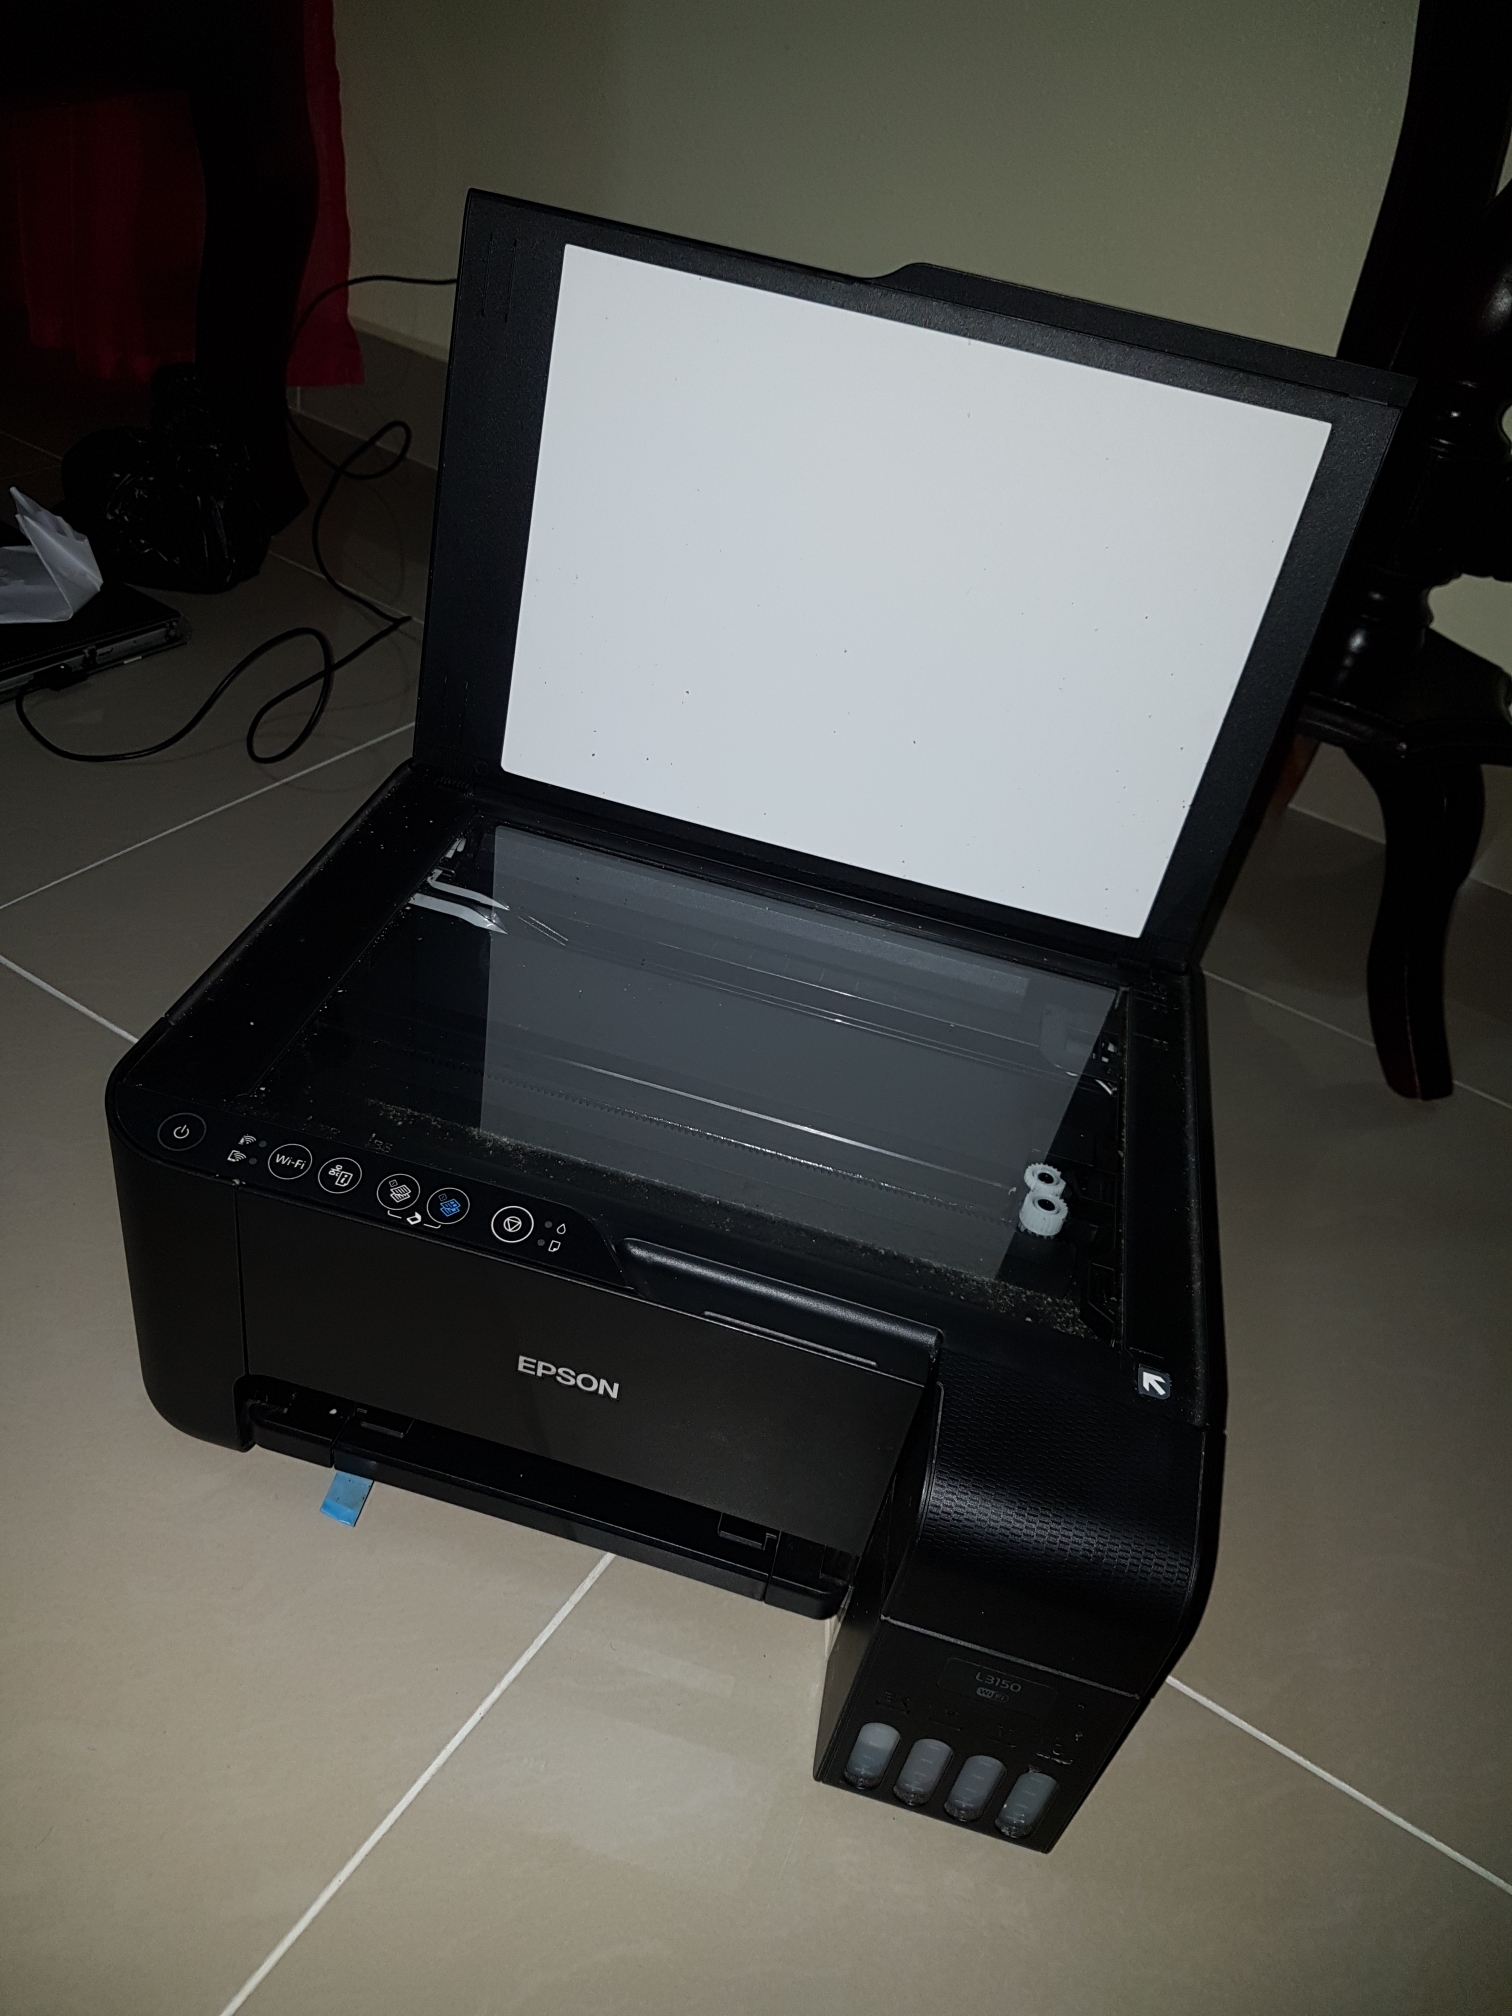 impresoras y scanners - Impresora EPSON